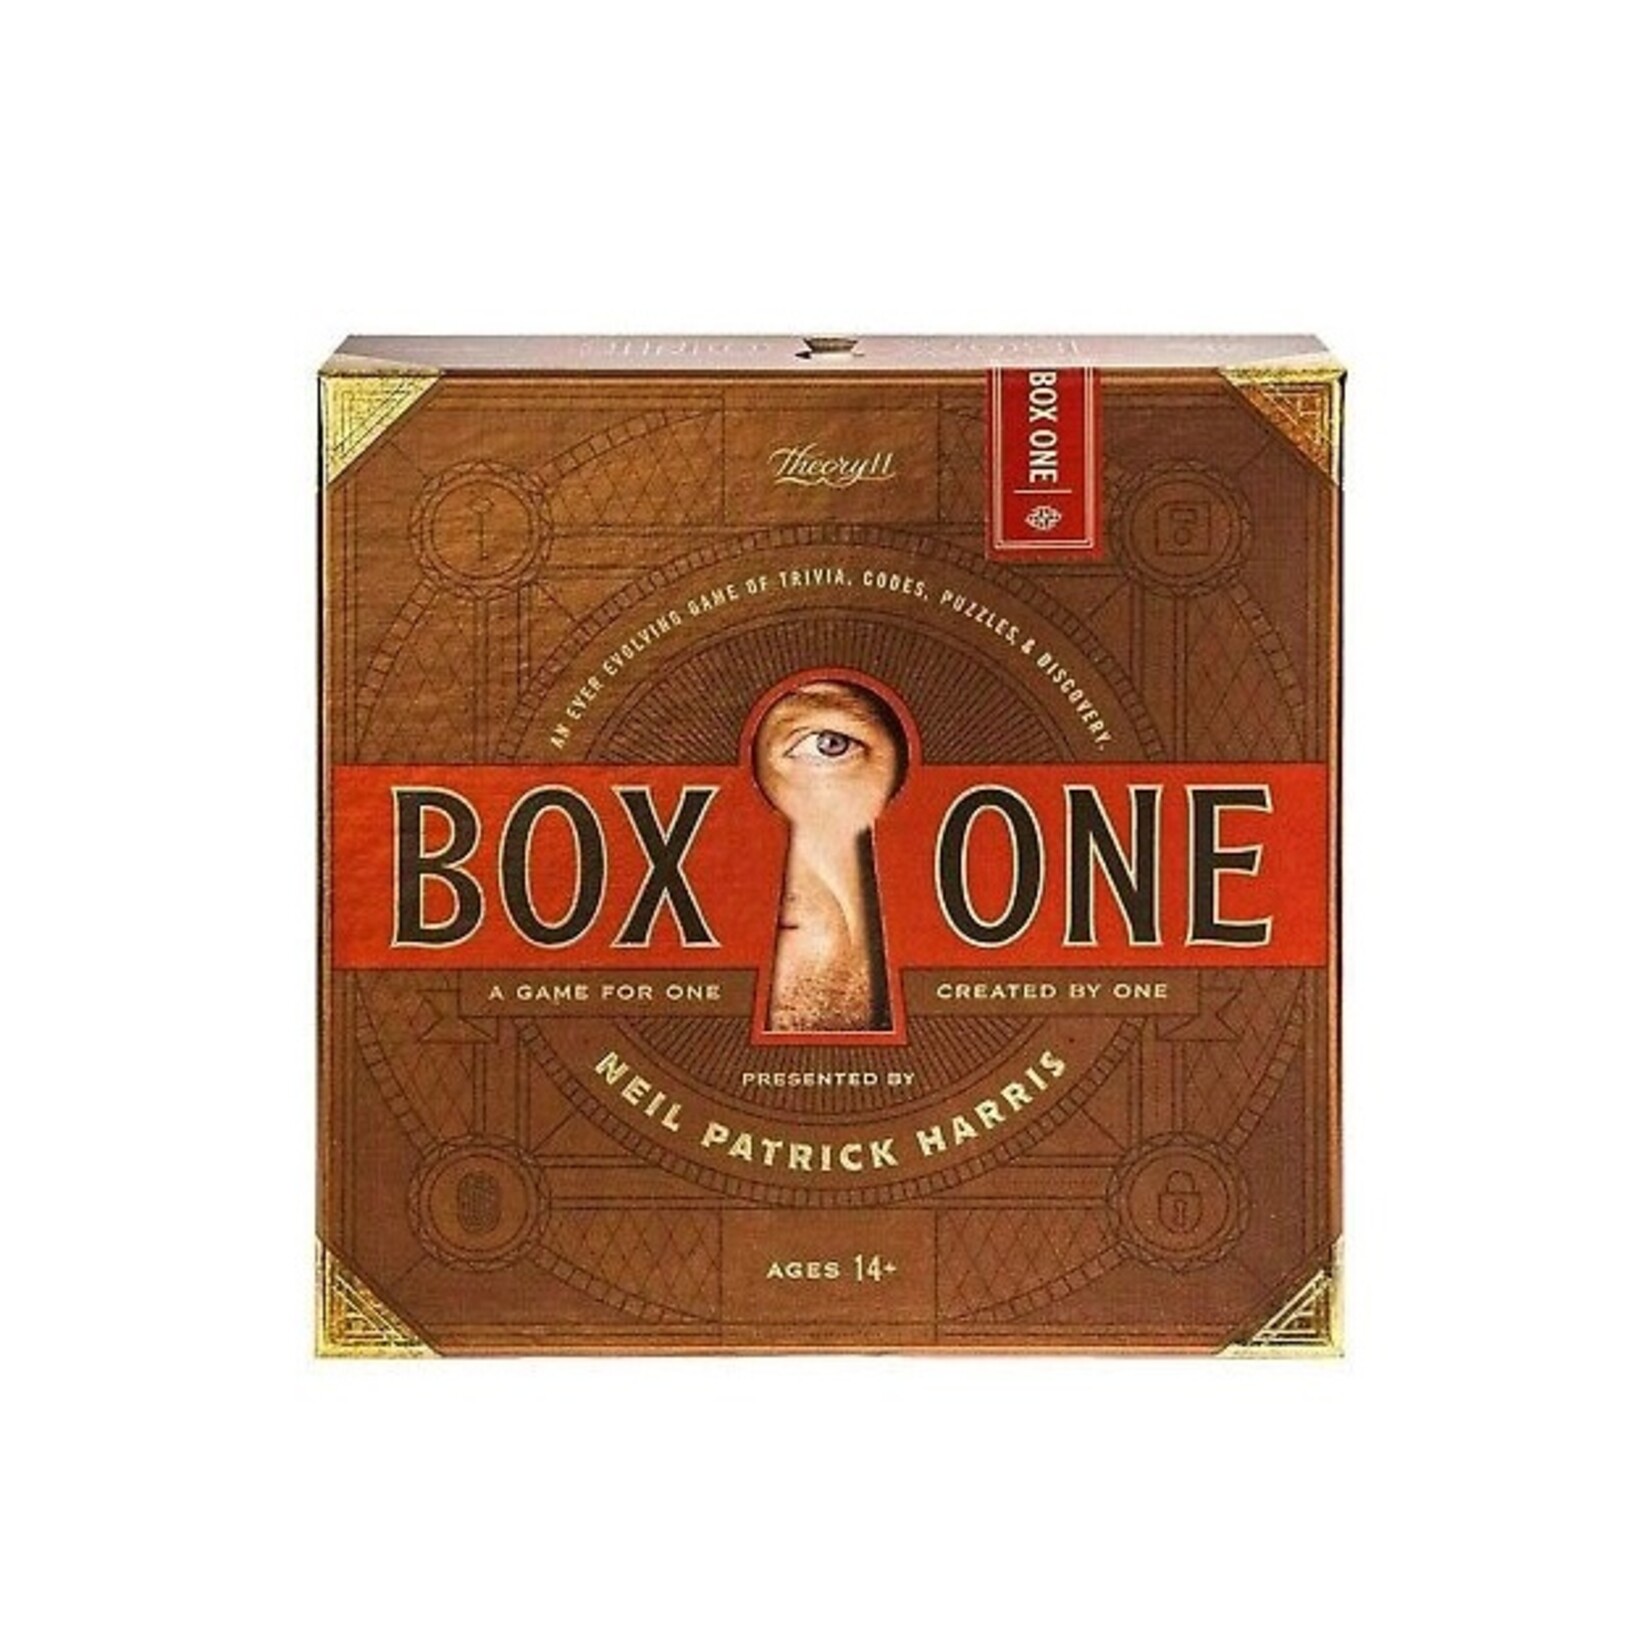 Theory 11 Theory 11 - Board Game - Box ONE (English)